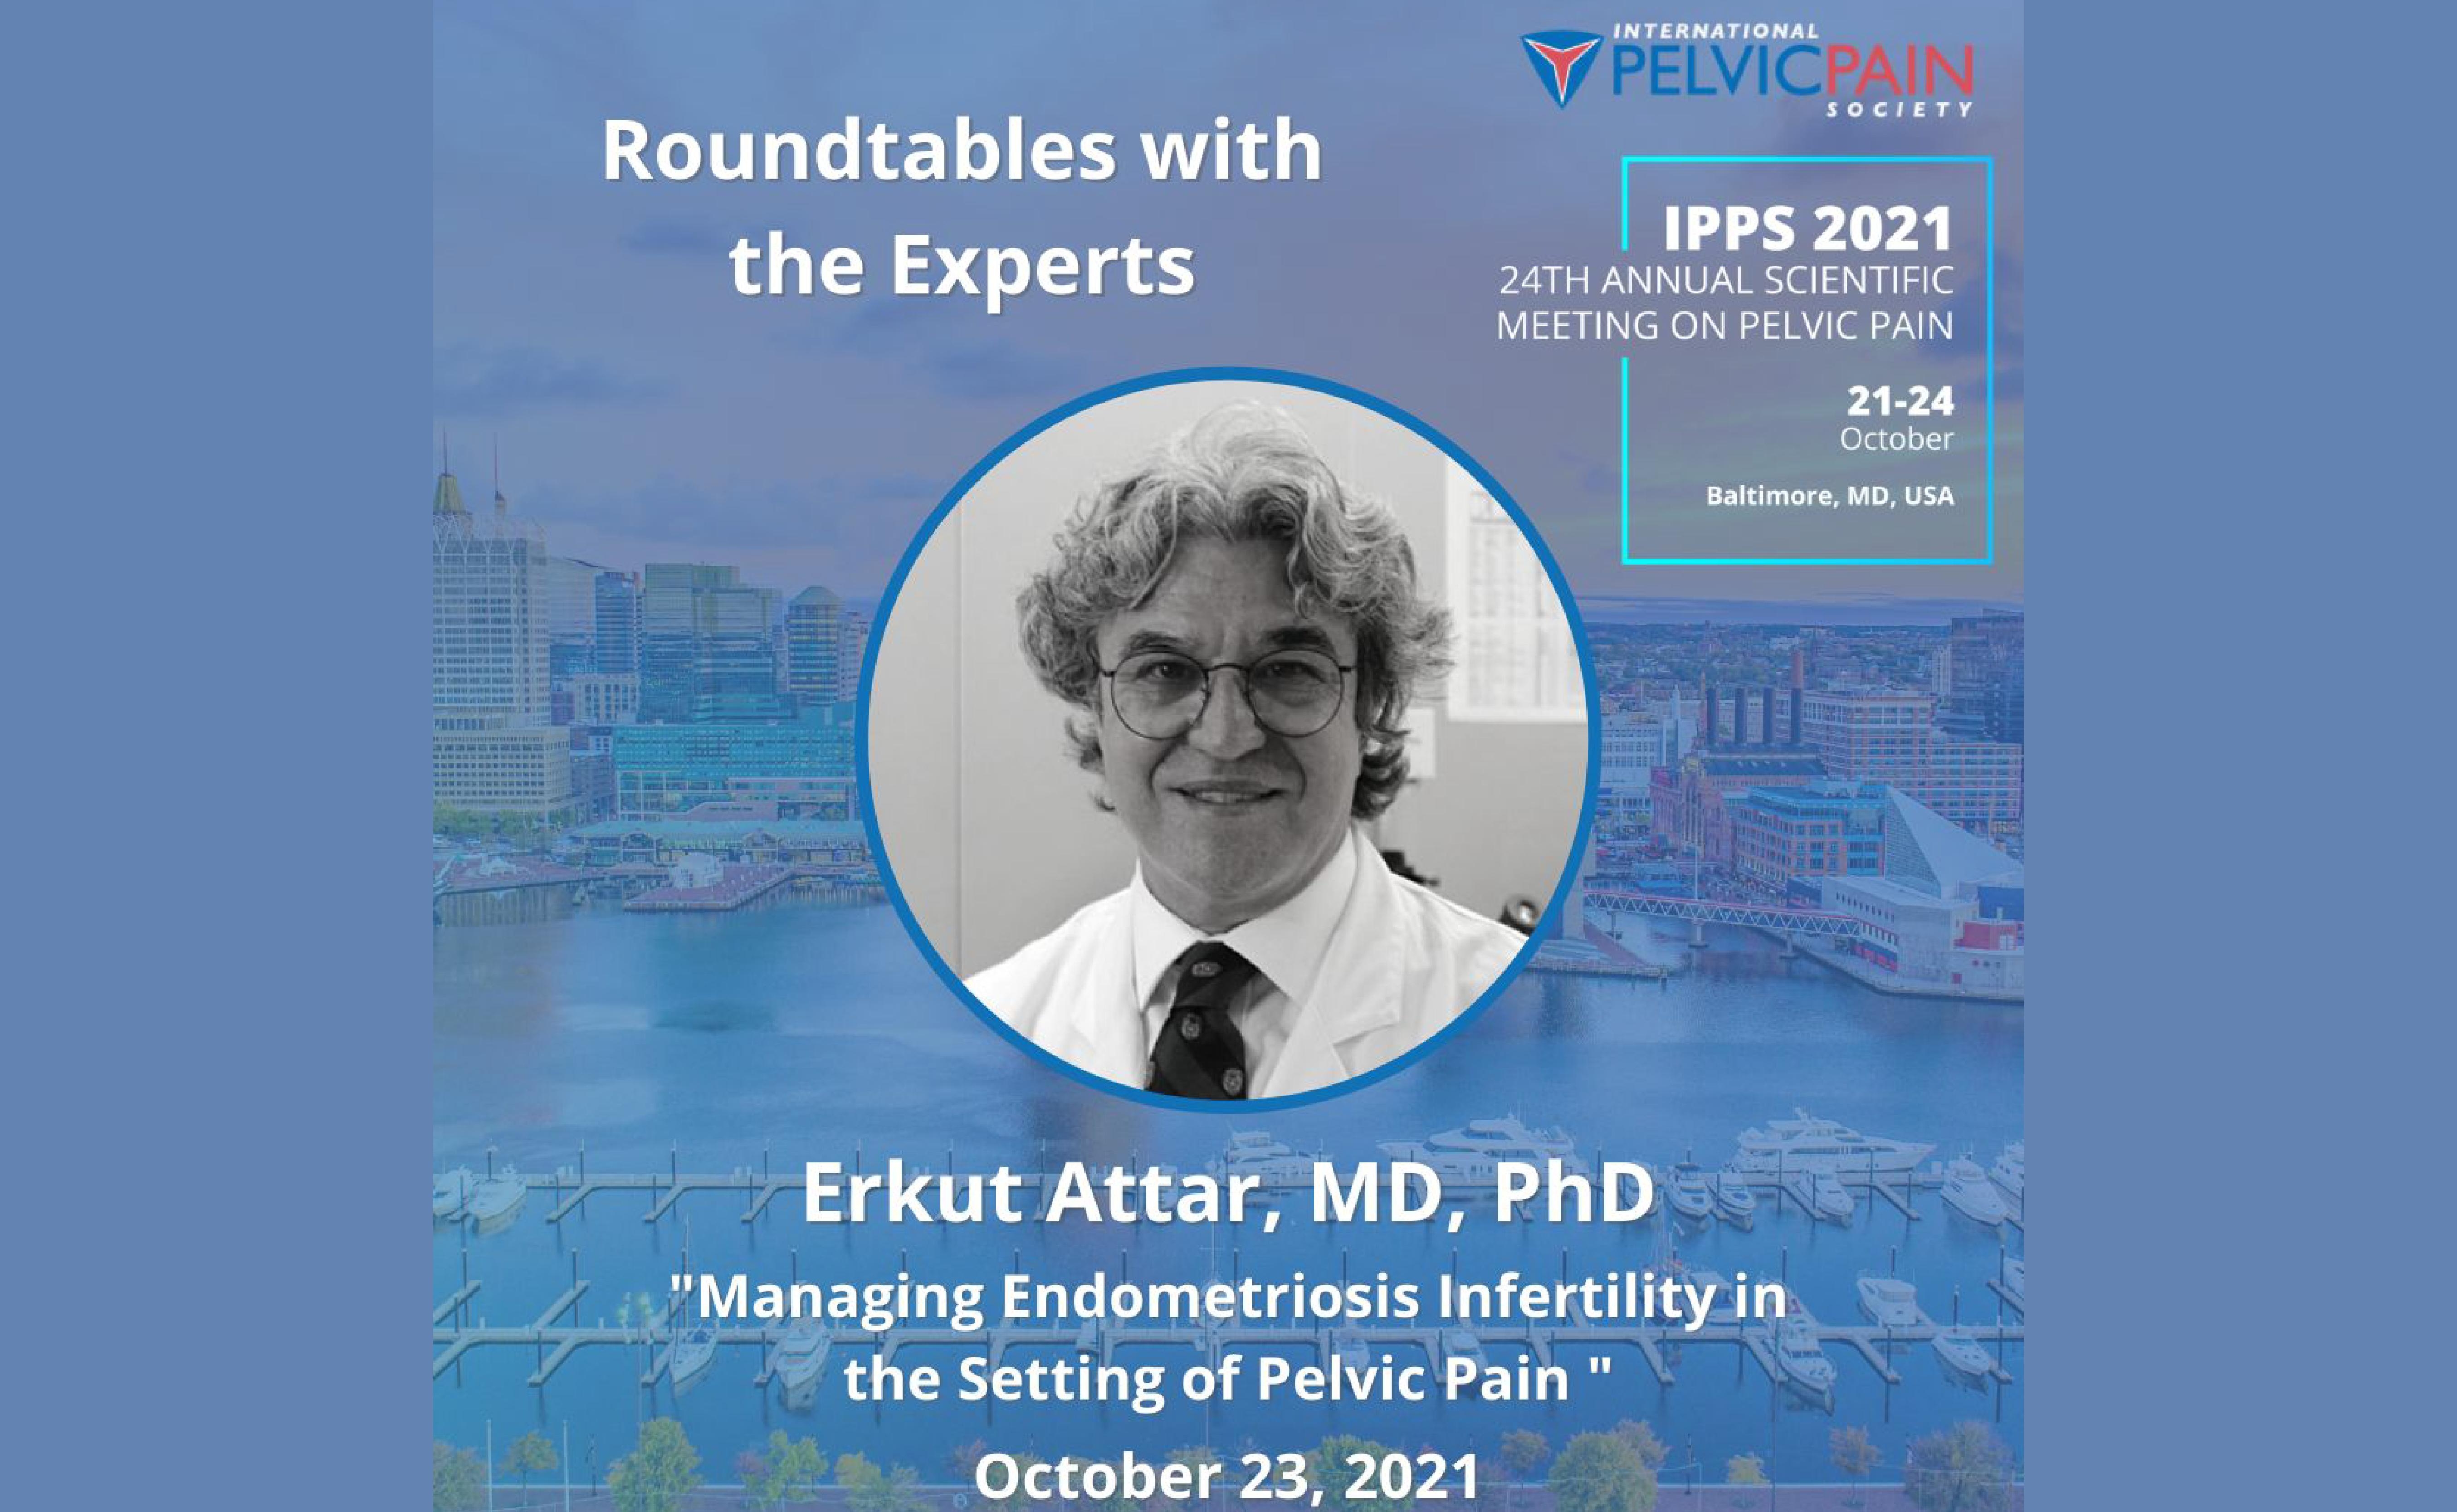 Prof. Dr. Erkut Attar - Managing Endometriosis Infertility in the Setting of Pelvic Pain